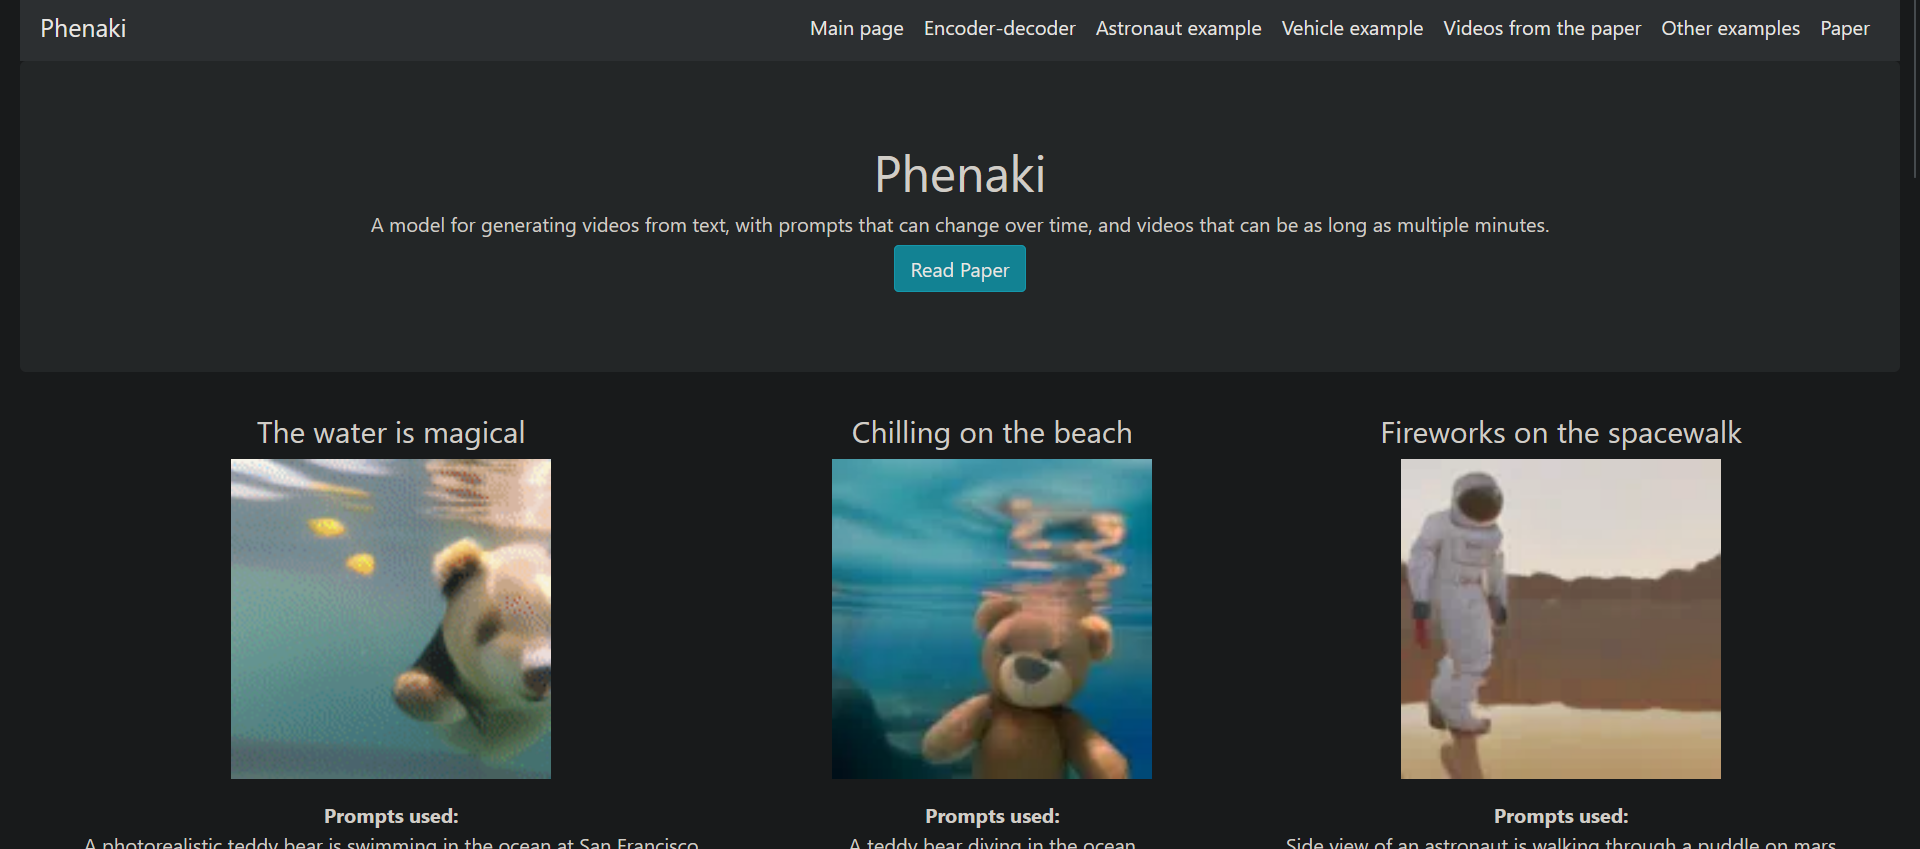 PhenakiA video generation model utilizing text input to create visual